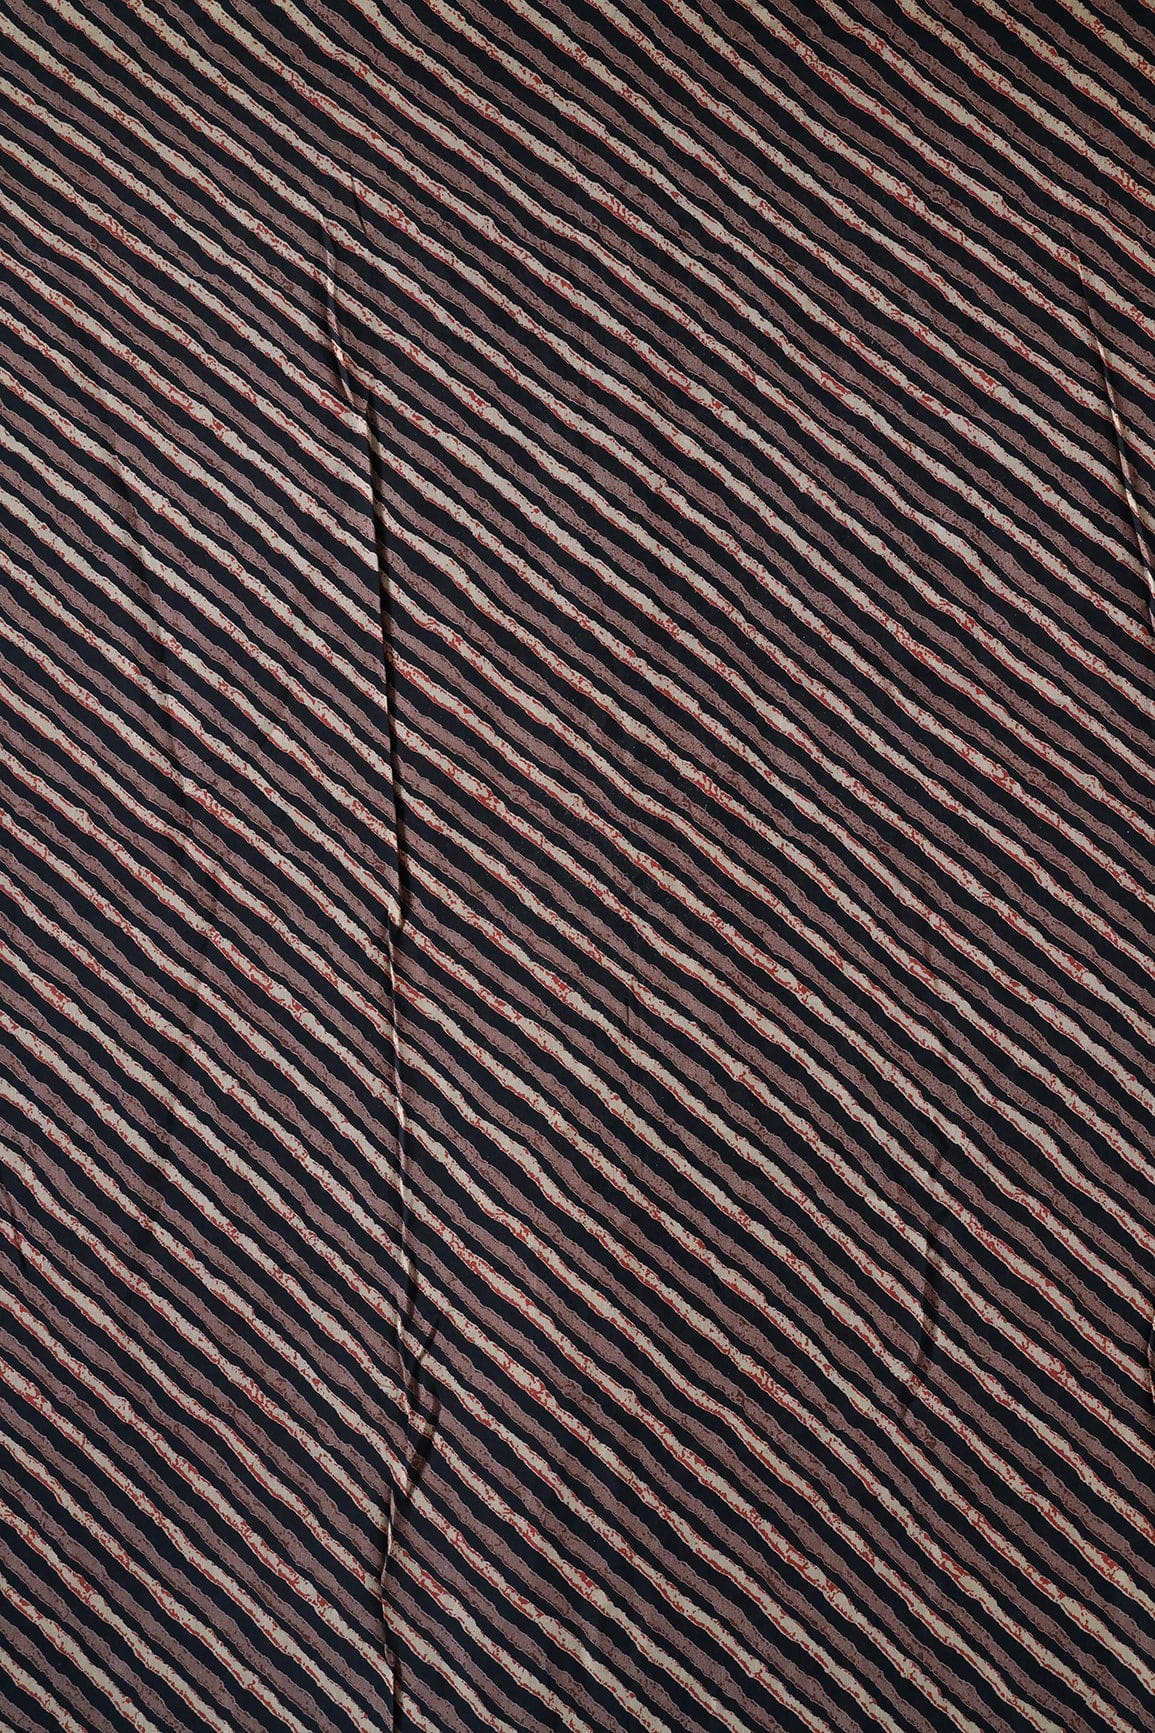 doeraa Prints Navy Blue And Cream Stripes Pattern Screen Print On Chanderi Silk Fabric